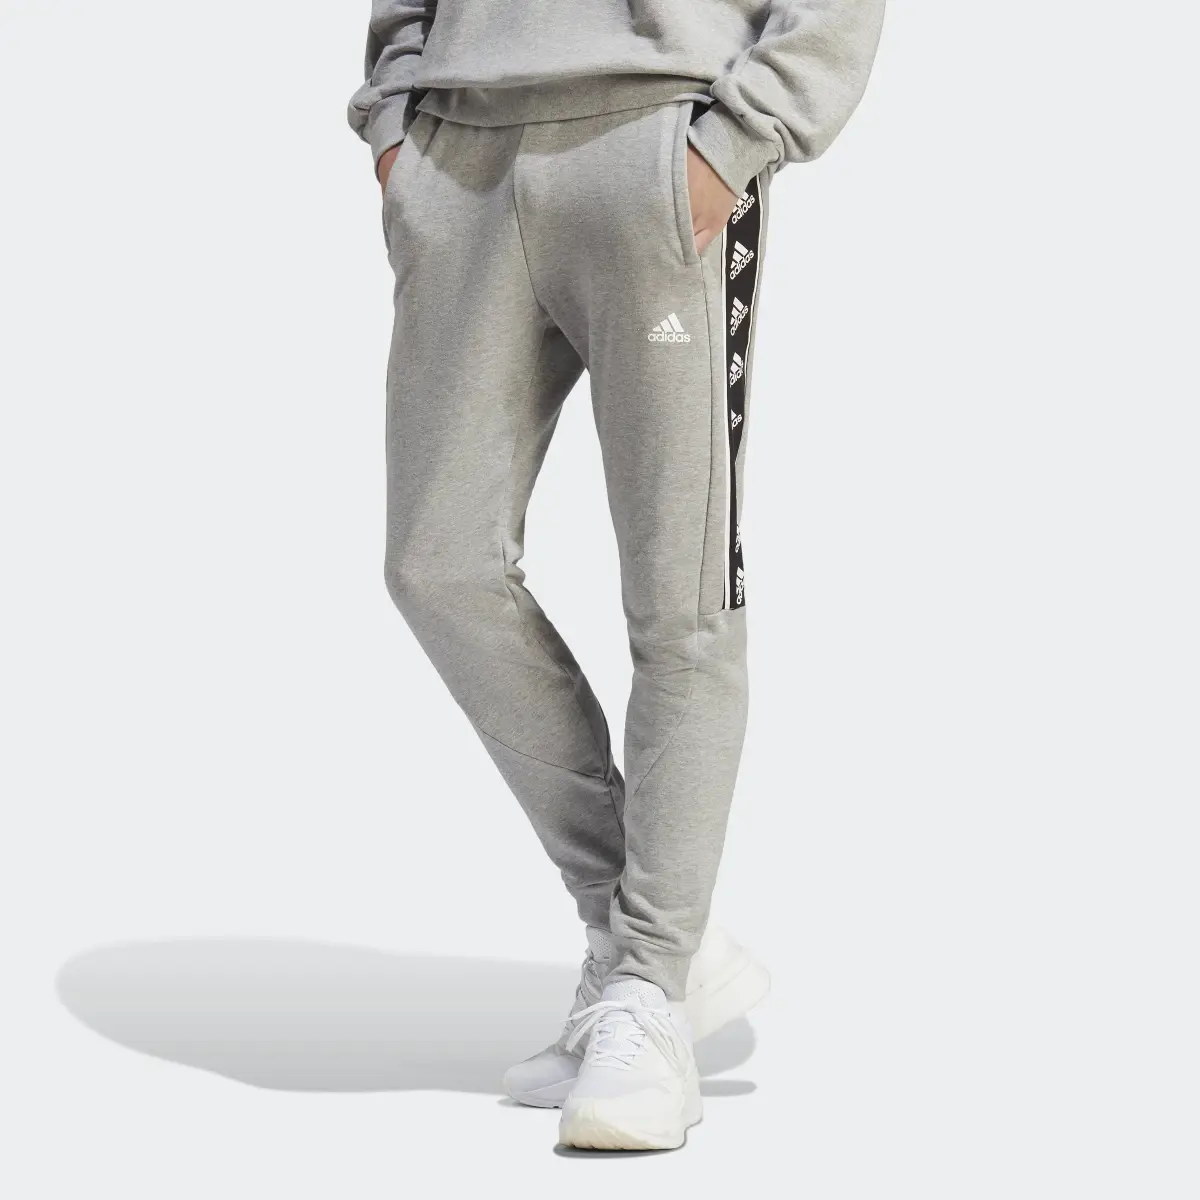 Adidas Brandlove Pants. 1